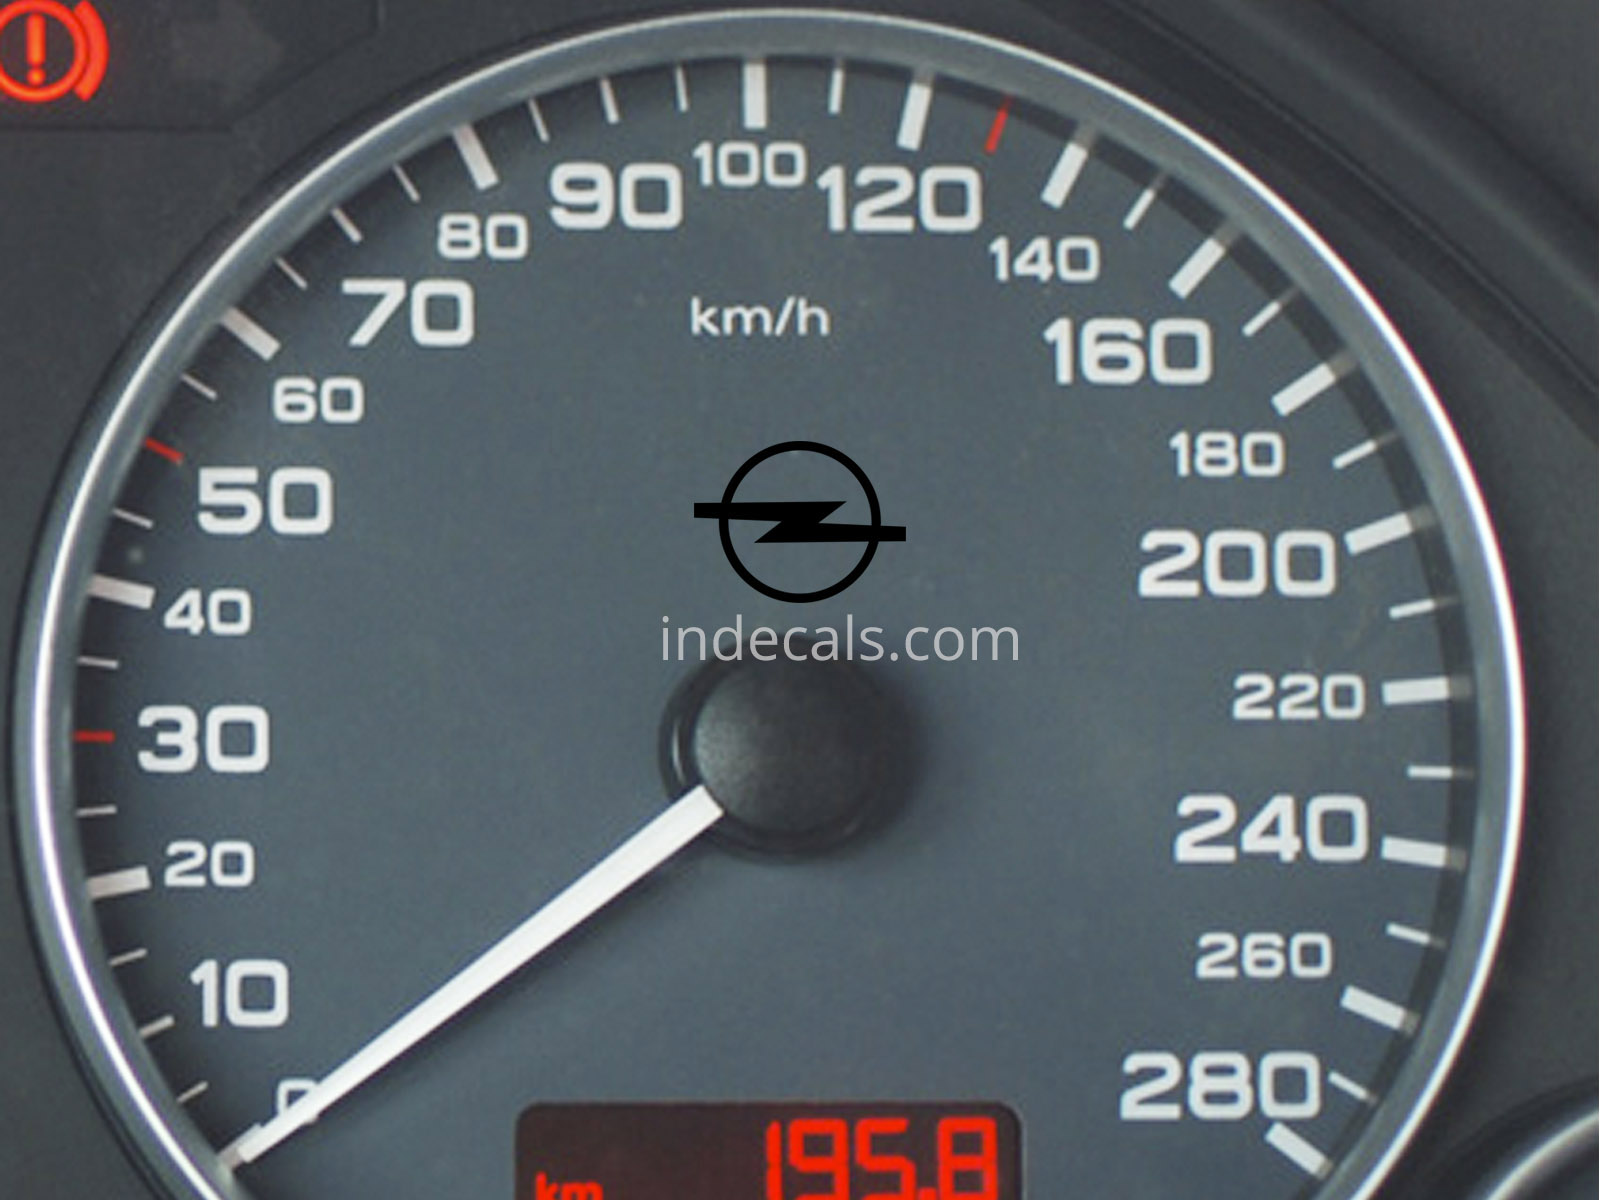 3 x Opel Stickers for Speedometer - Black